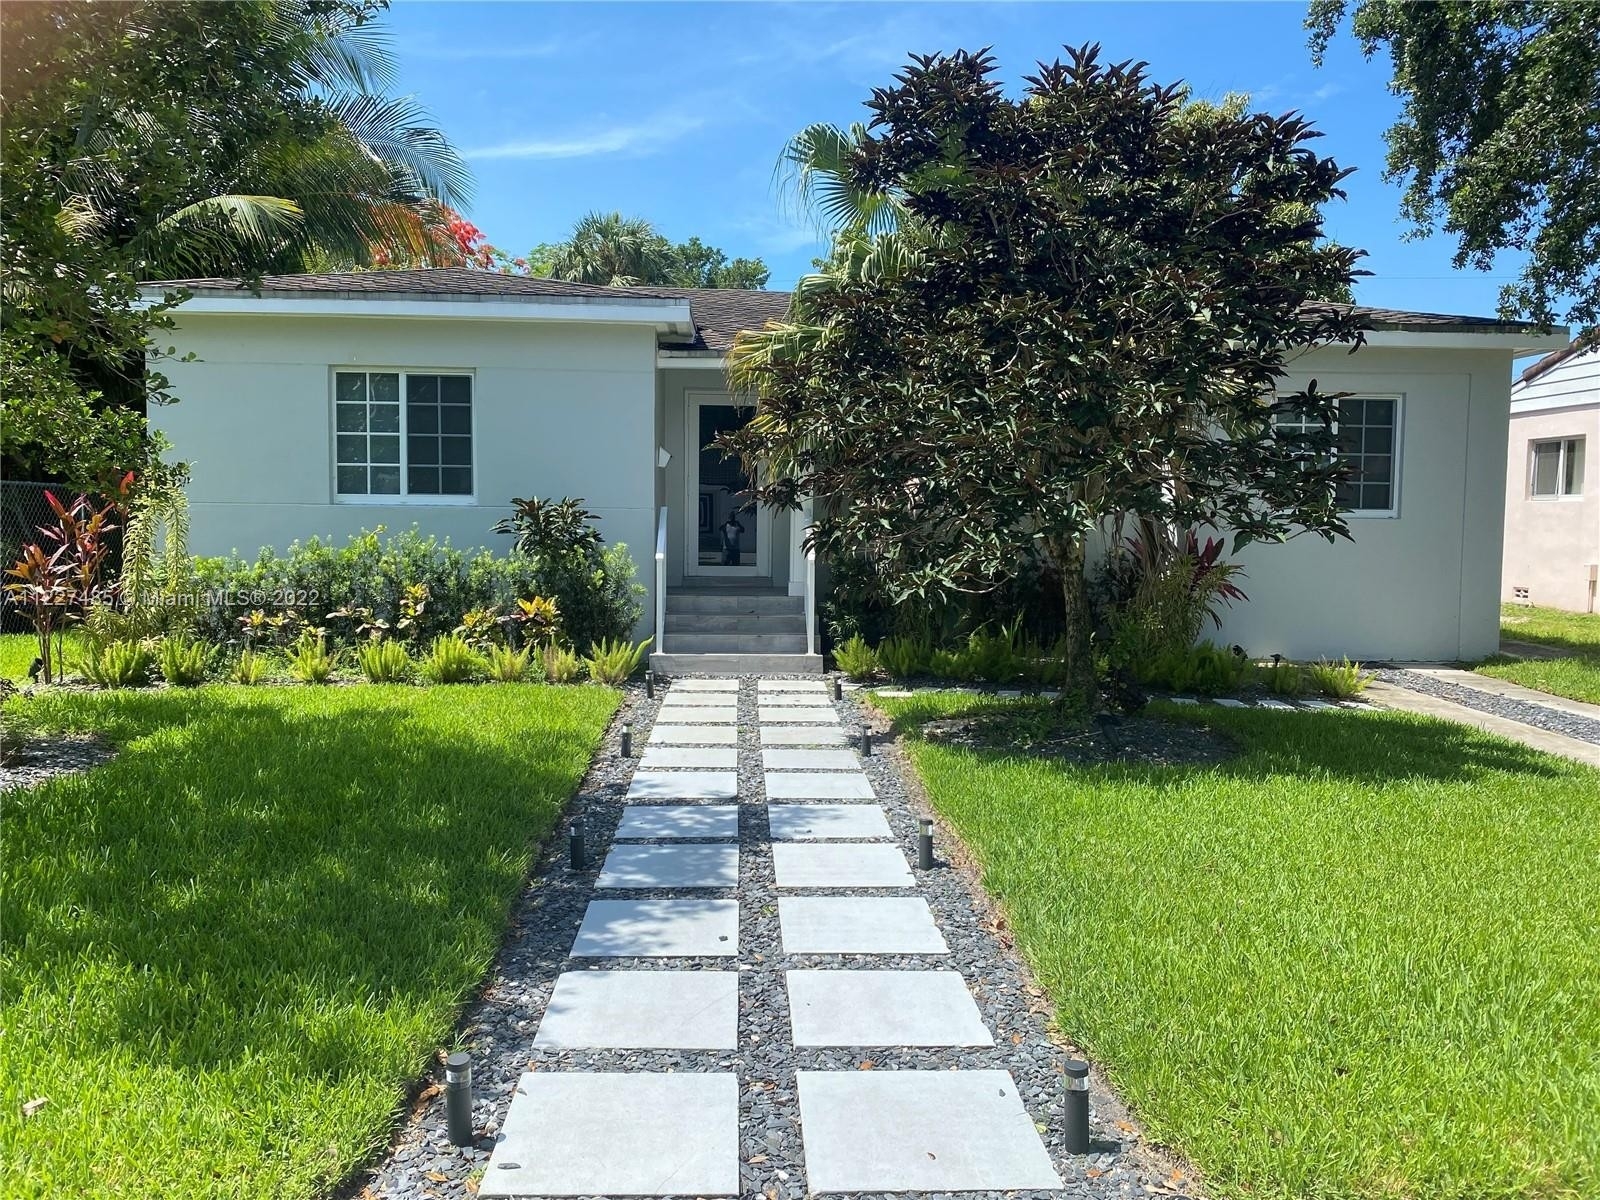 Single Family Home at Miami Springs, FL 33166